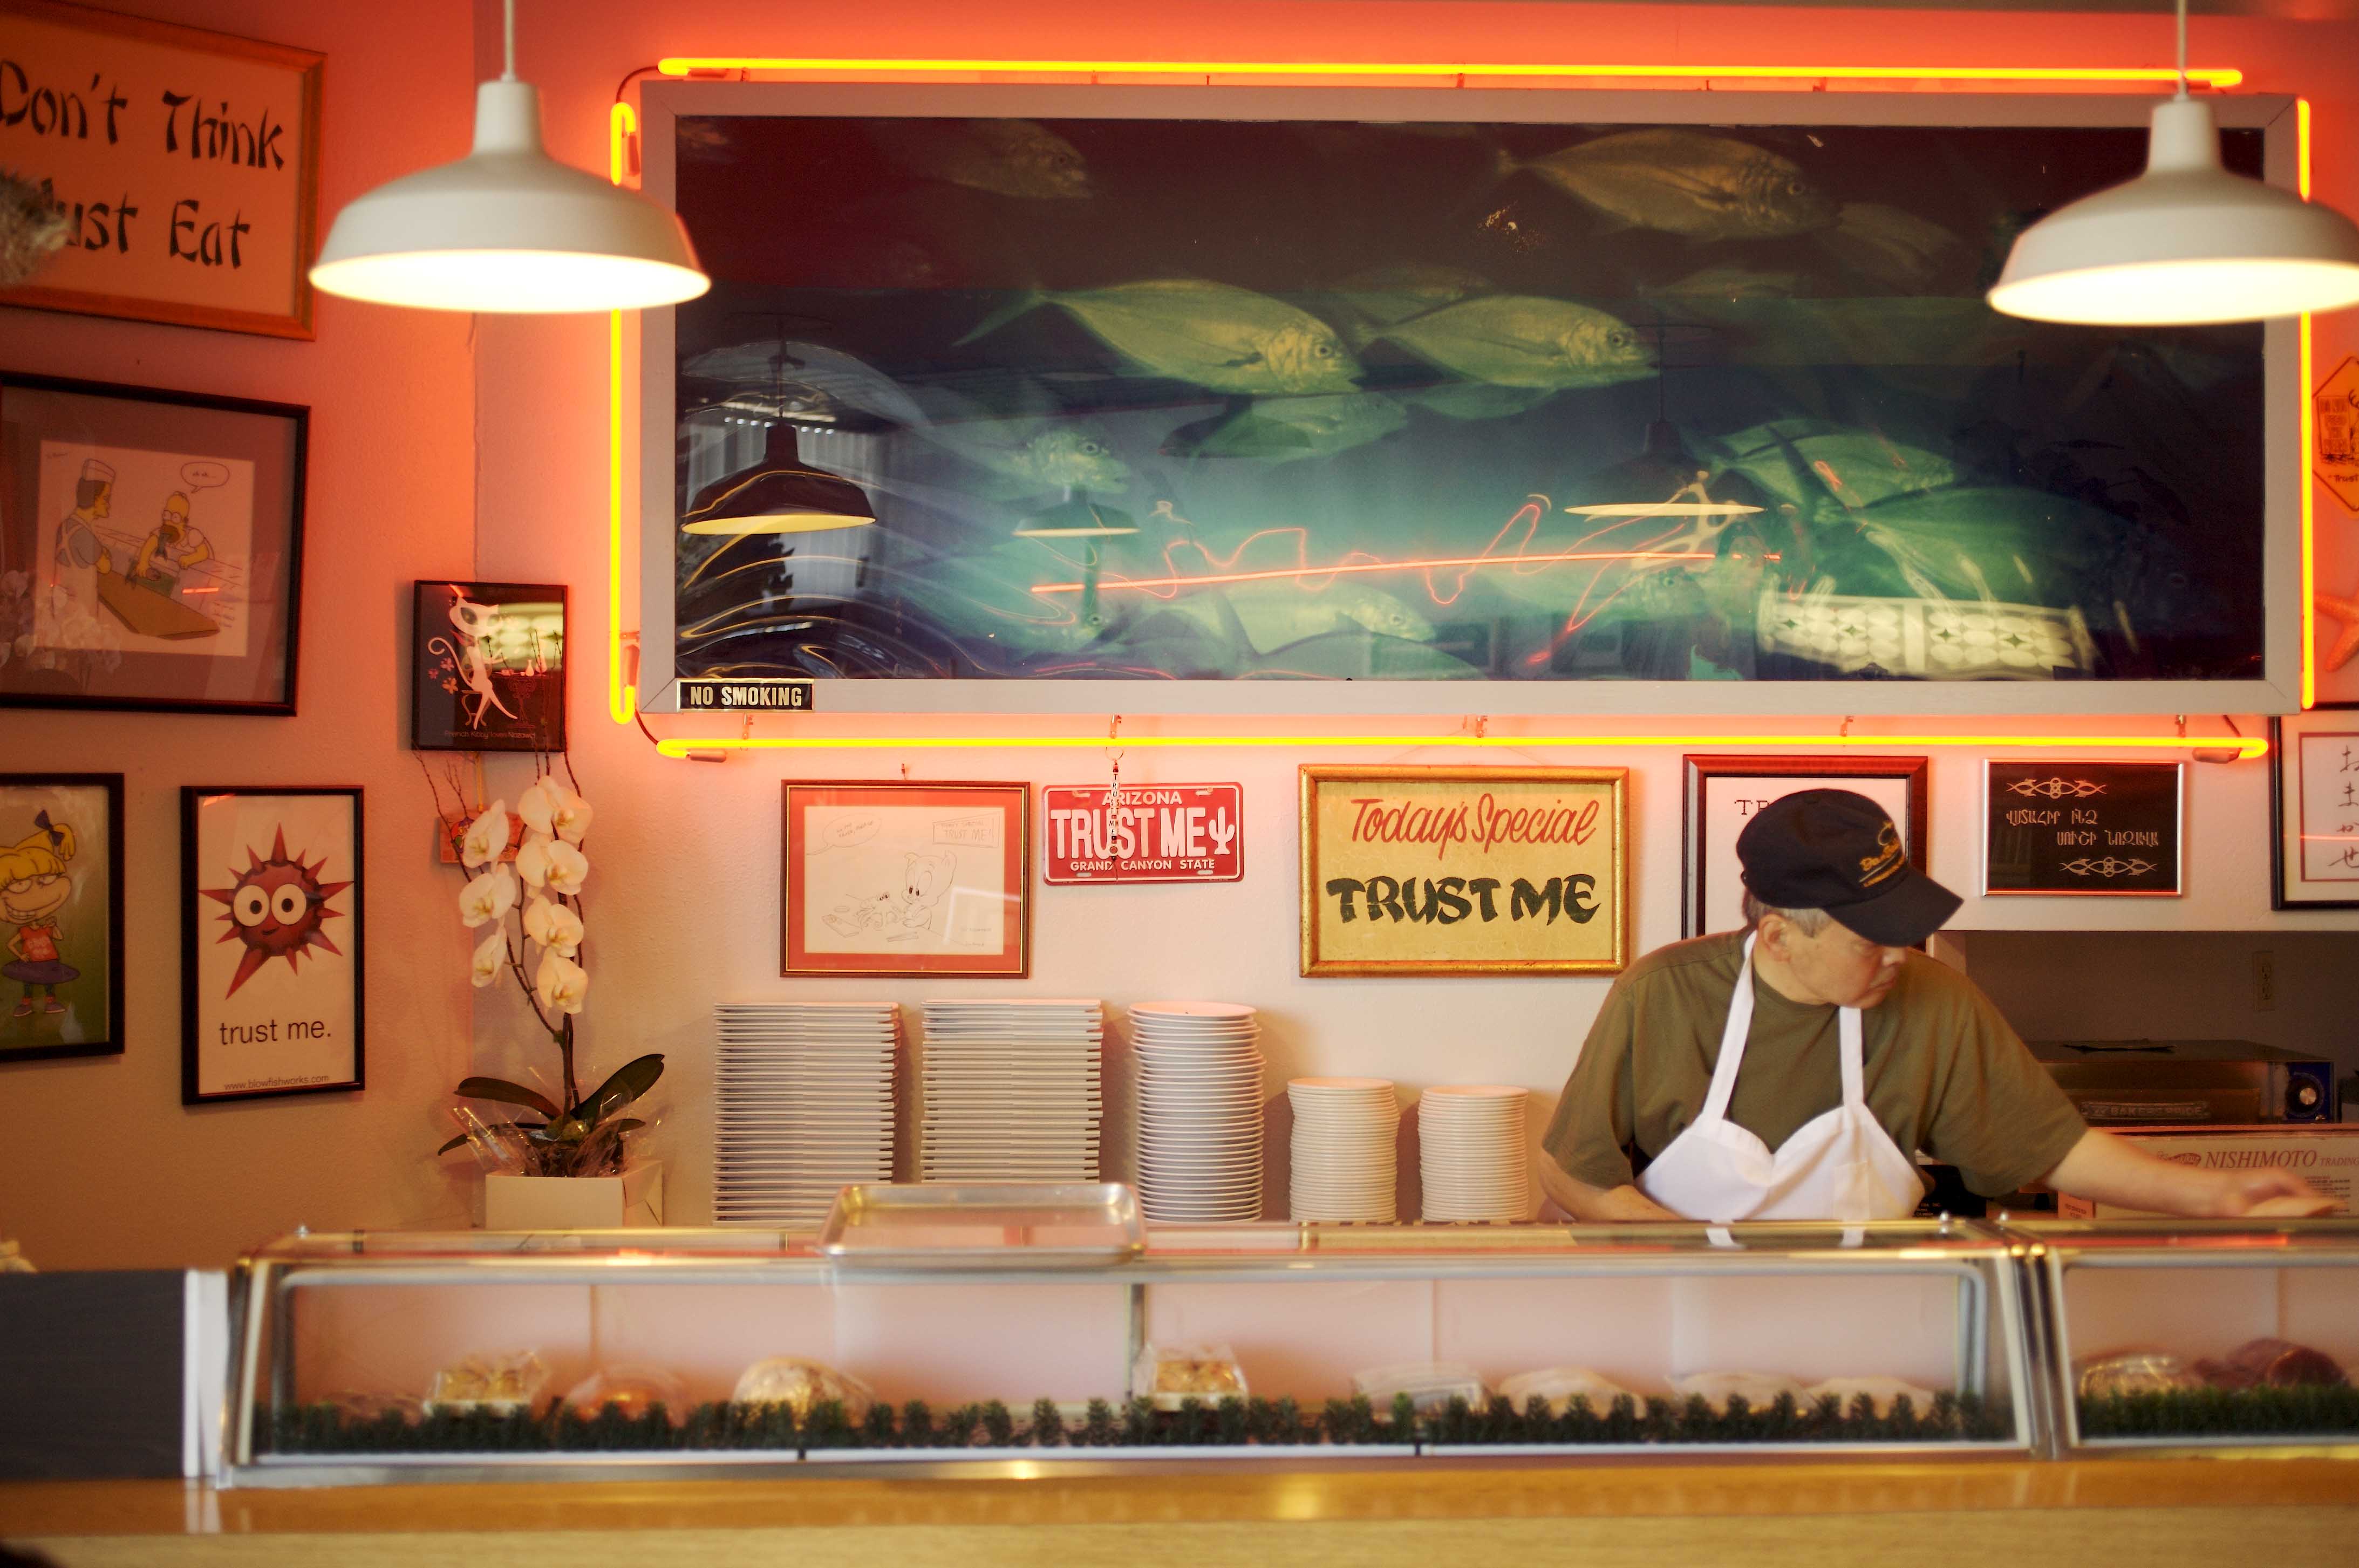 Chef Nozawa standing behind sushi bar at original Sushi Nozawa in Studio City